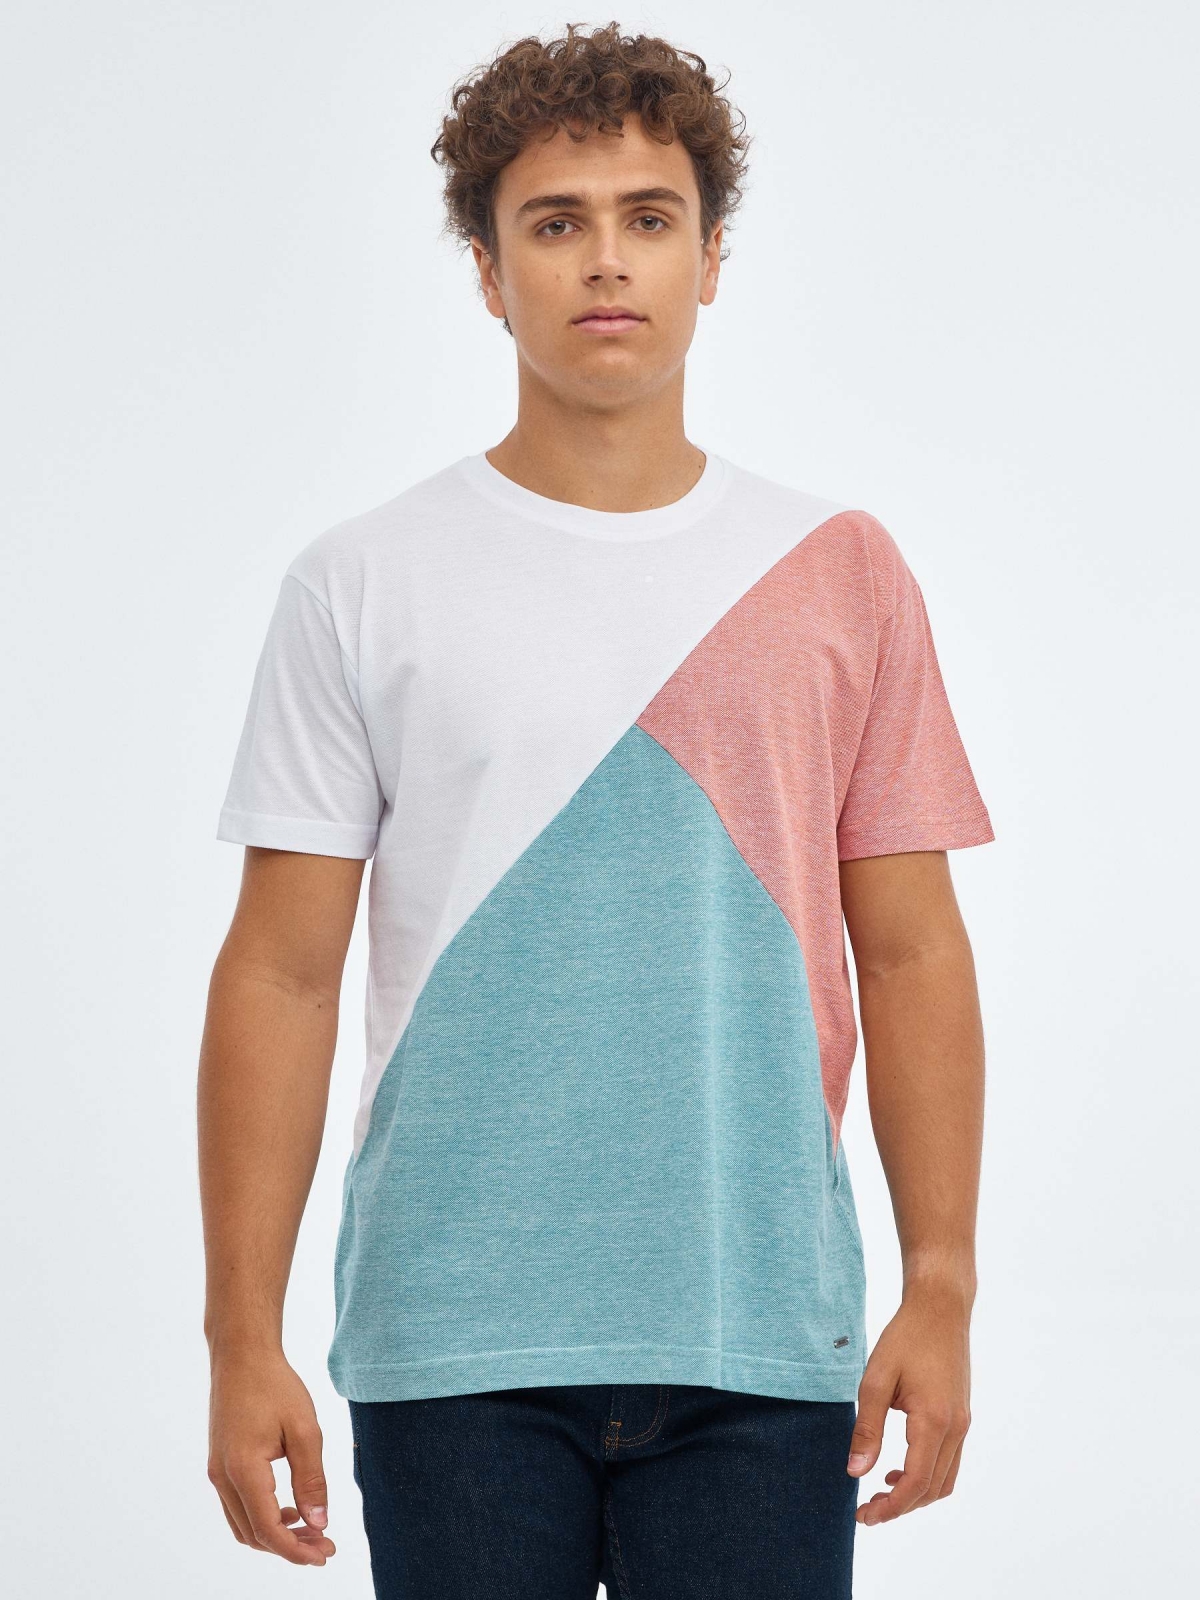 Geometric T-shirt block colour white middle front view